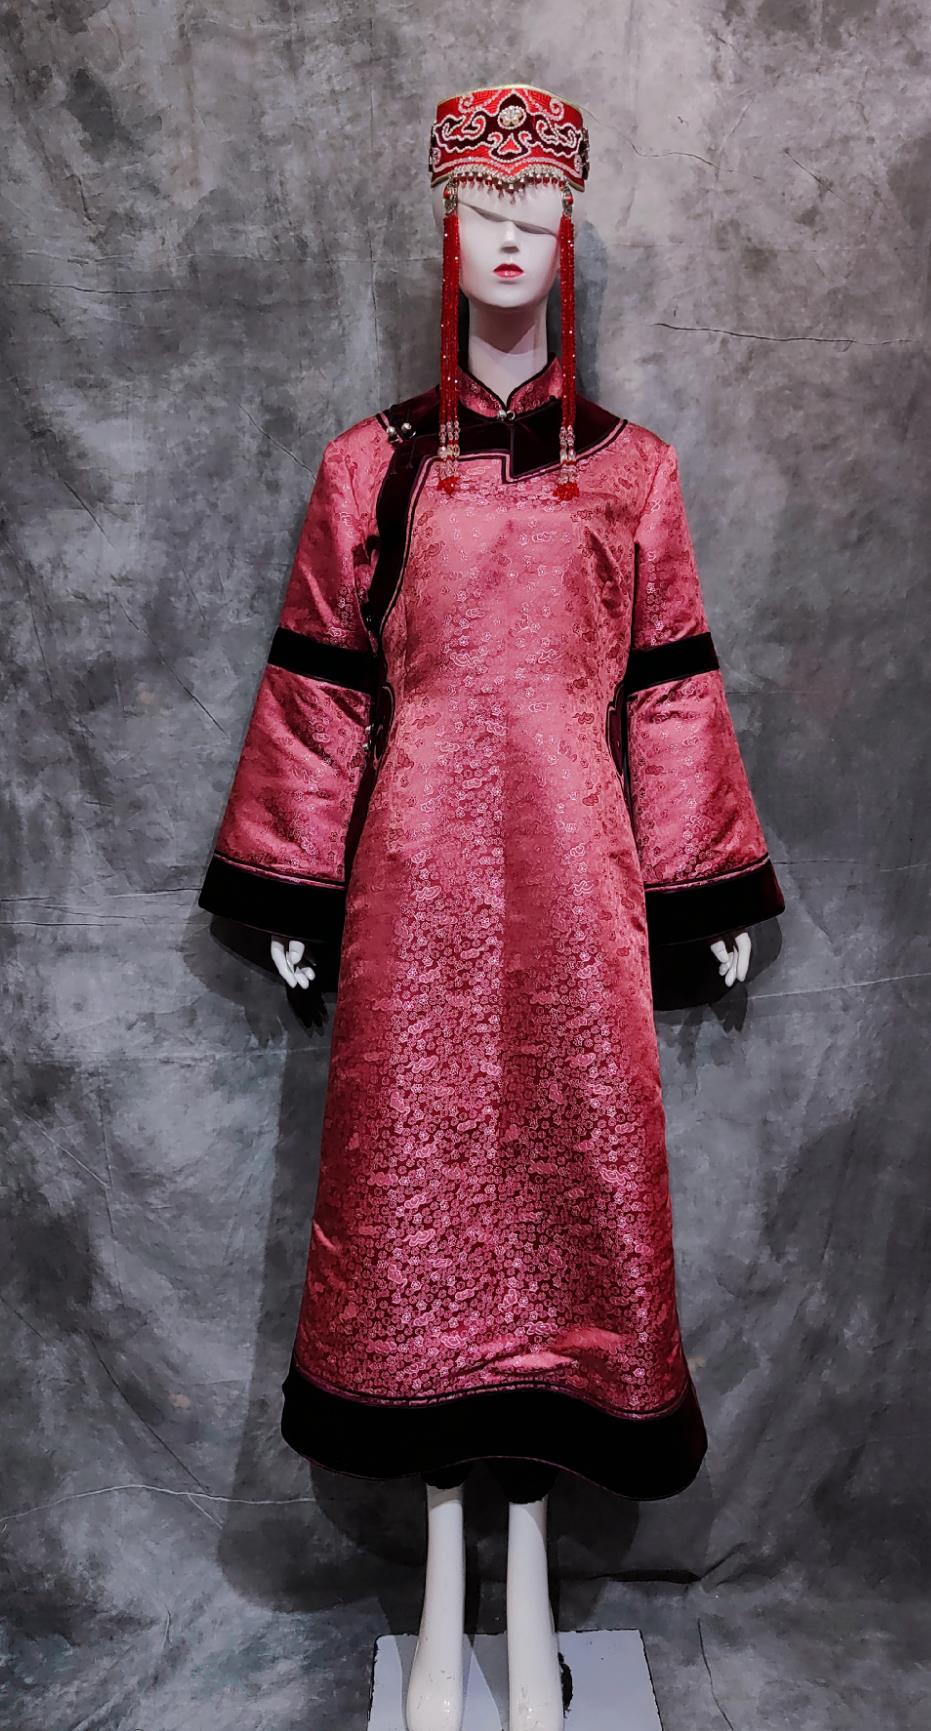 Chinese Daghur Ethnic Festival Costume China Daur National Minority Woman Clothing Traditional Dance Deep Pink Dress